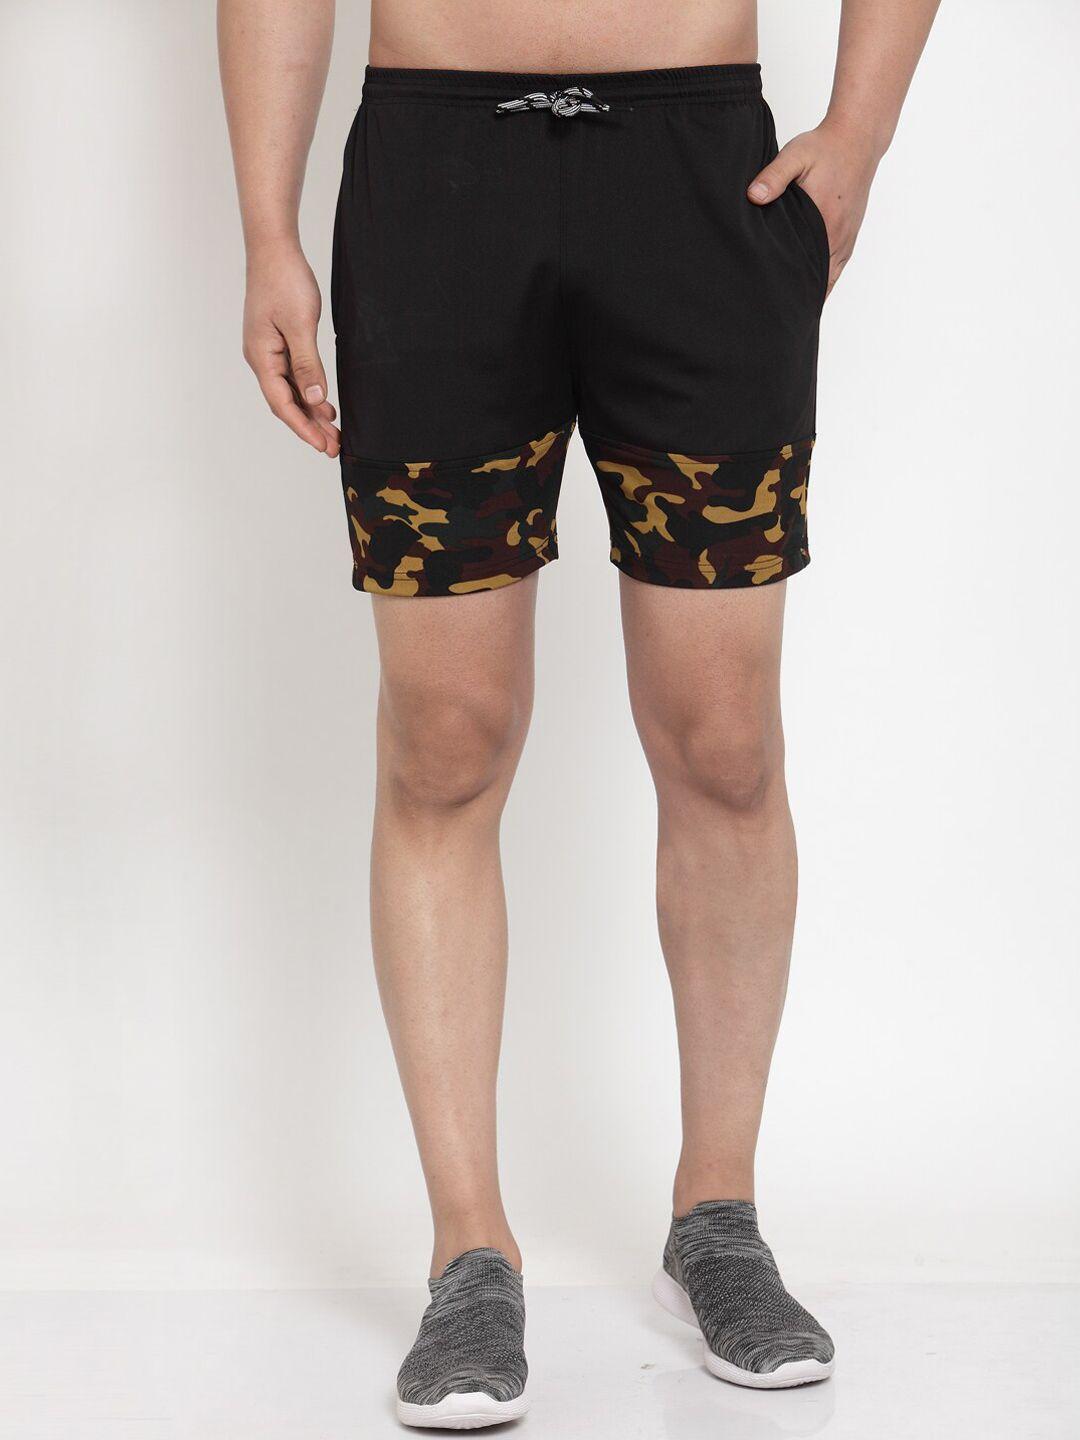 klotthe men camouflaged-printed shorts